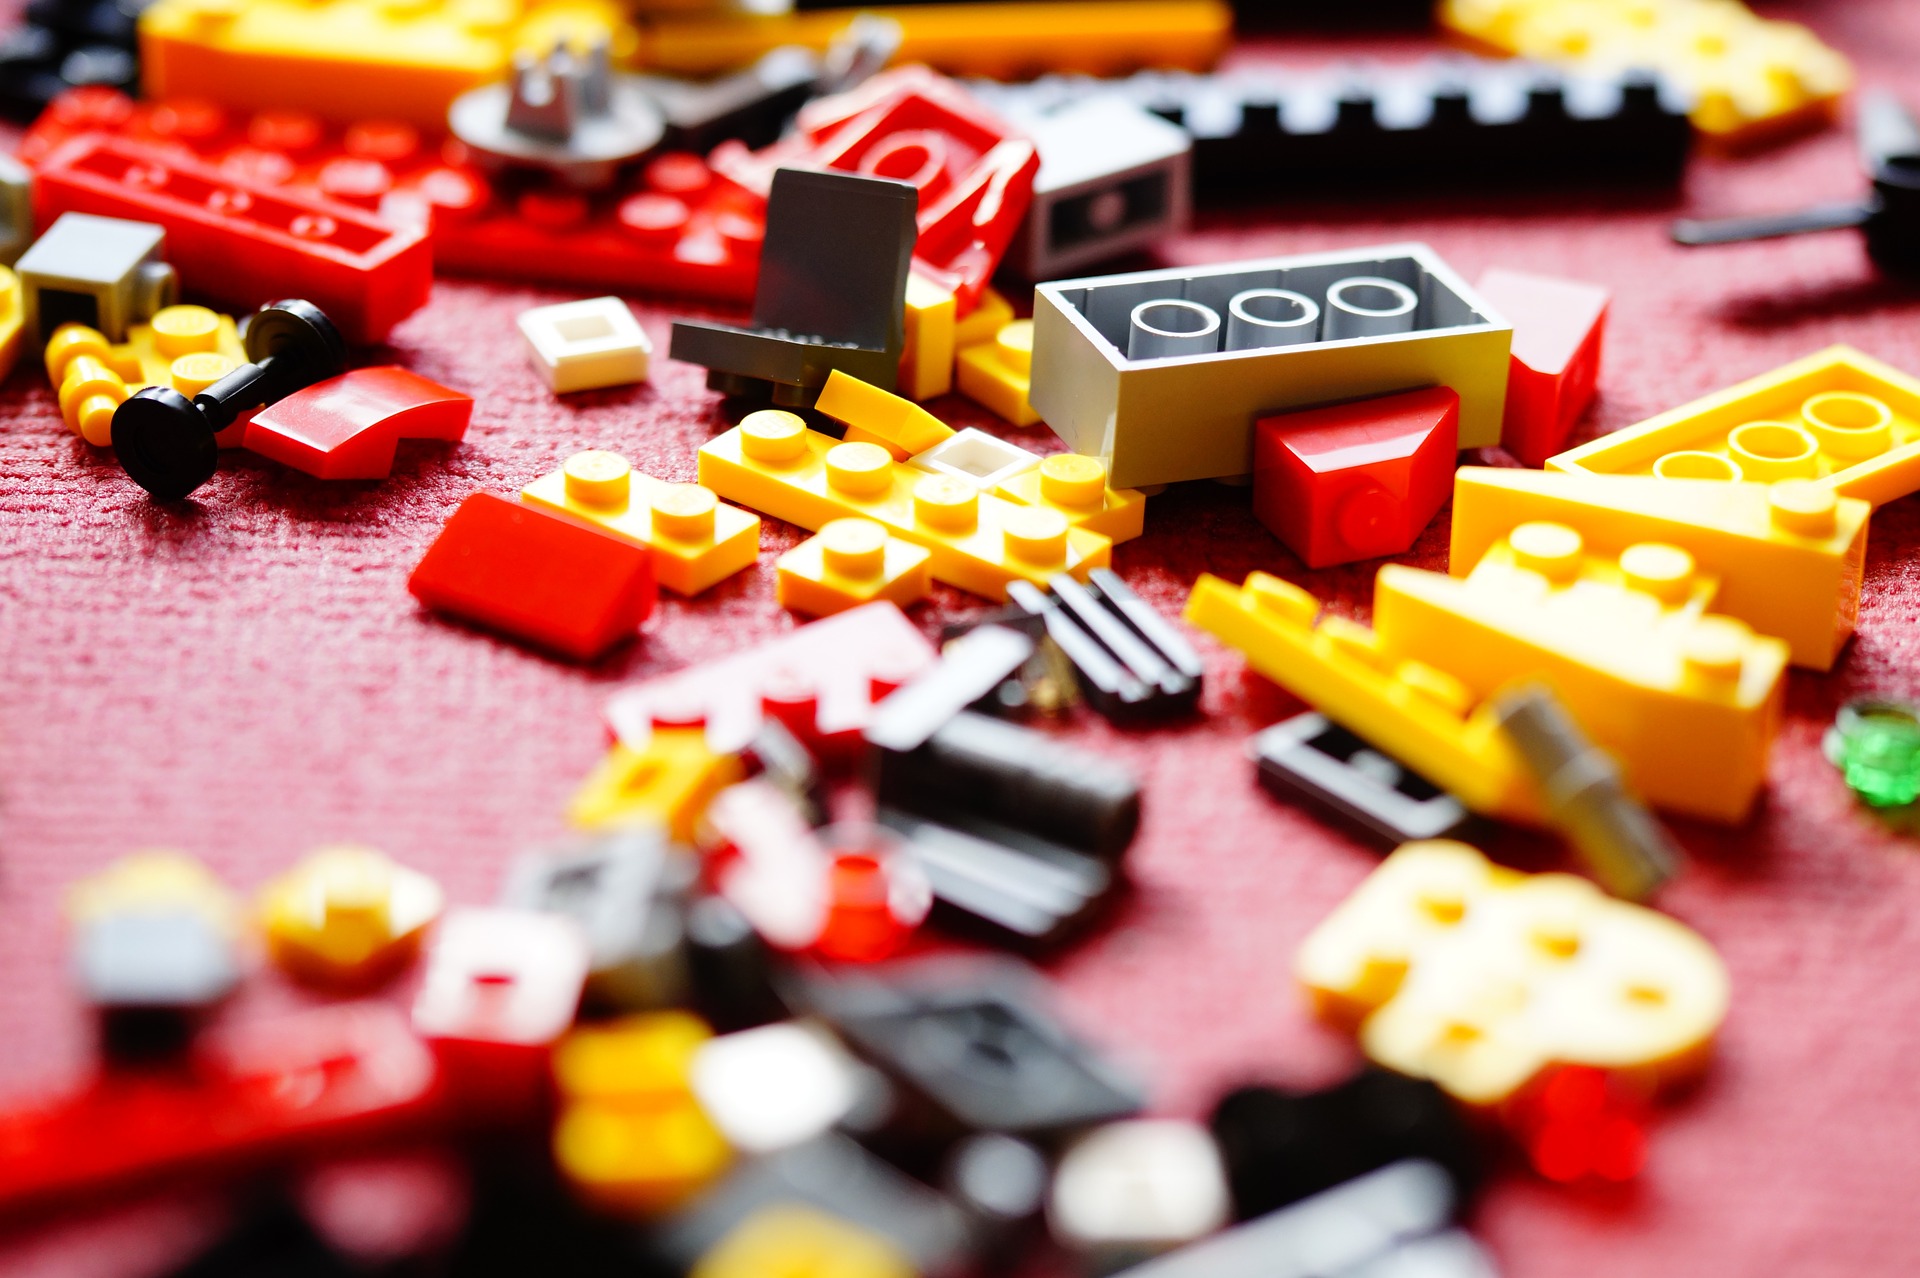 Lego Pile